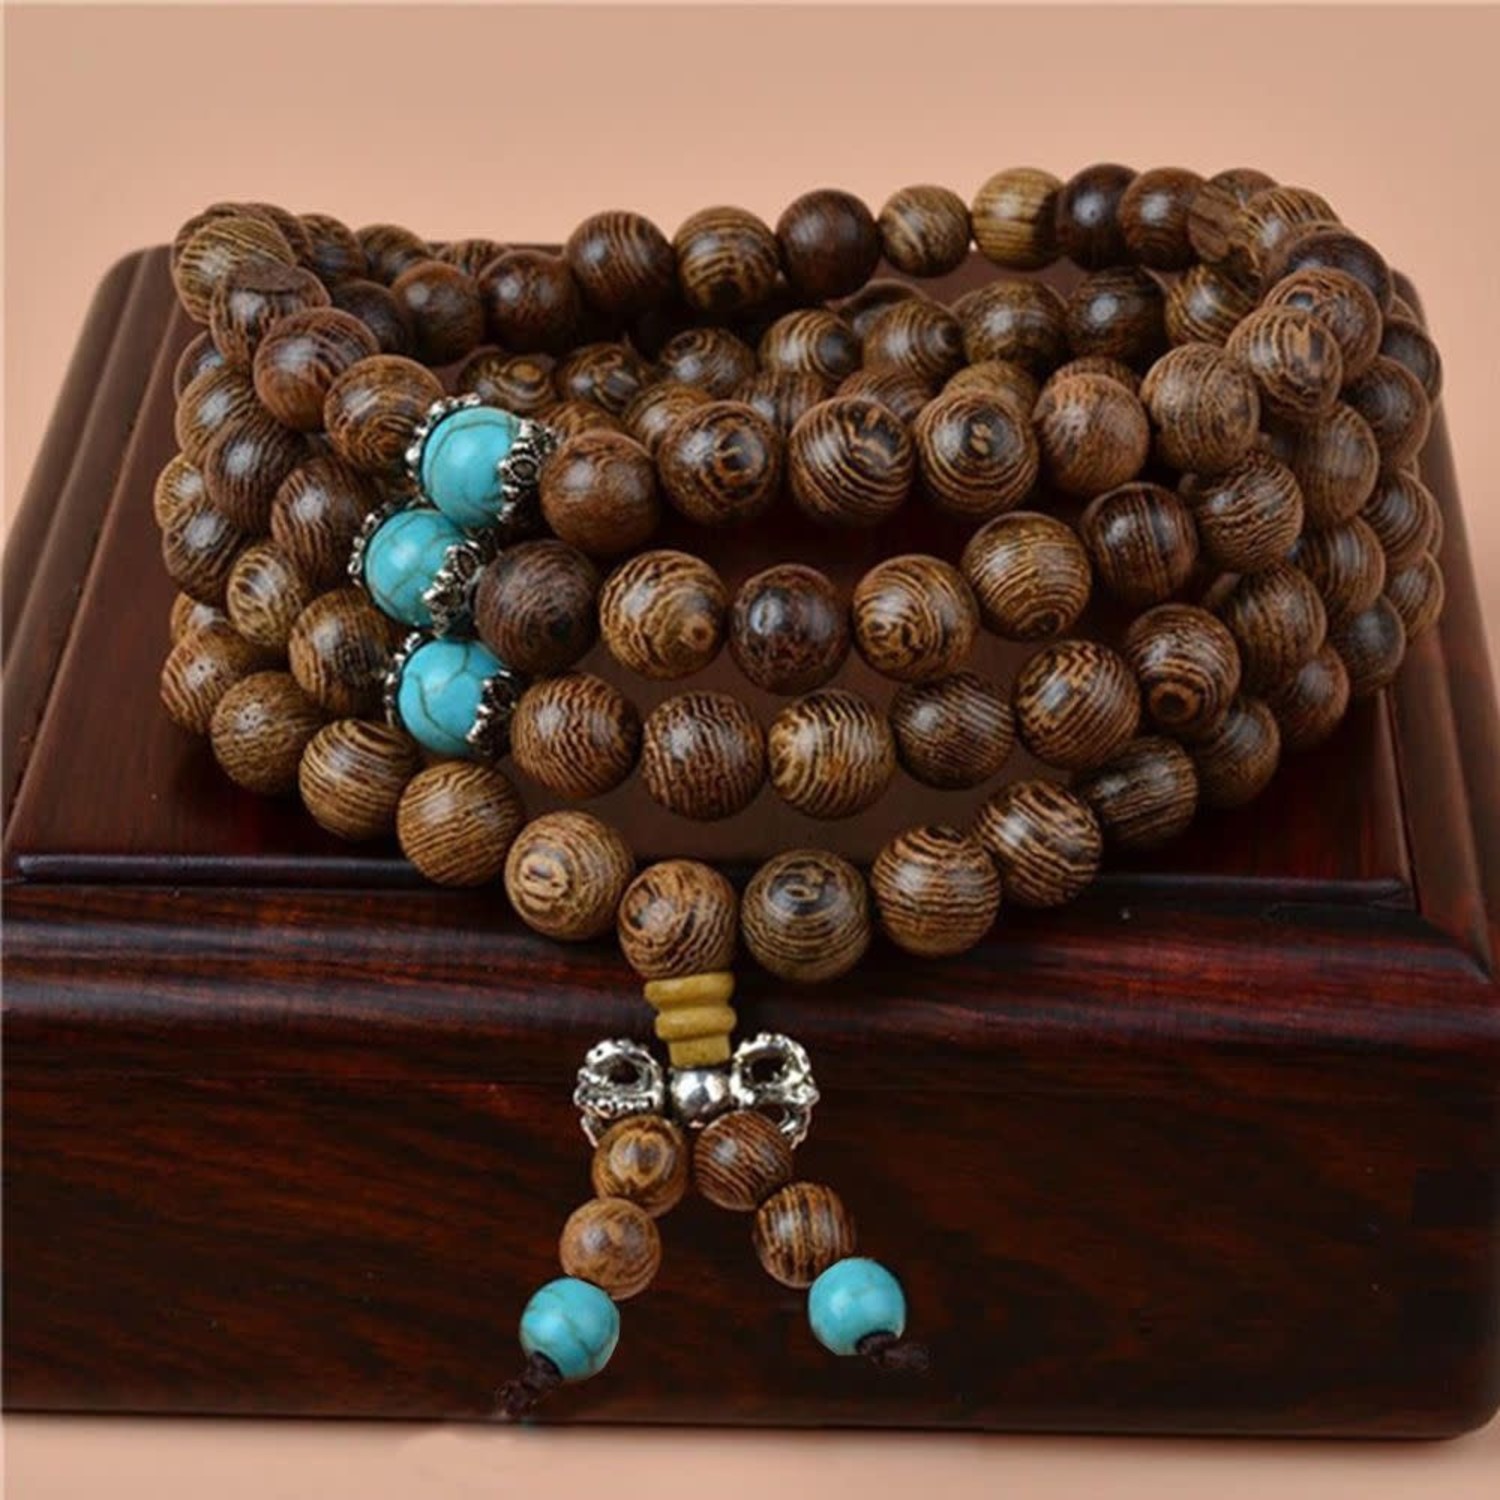 Epoch World 108 Prayer Beads Bracelet 8mm Natural Wood Tibetan Buddhist  Buddha Mala Meditation bead bracelet/Necklace for Men Women in gift box :  Amazon.co.uk: Fashion